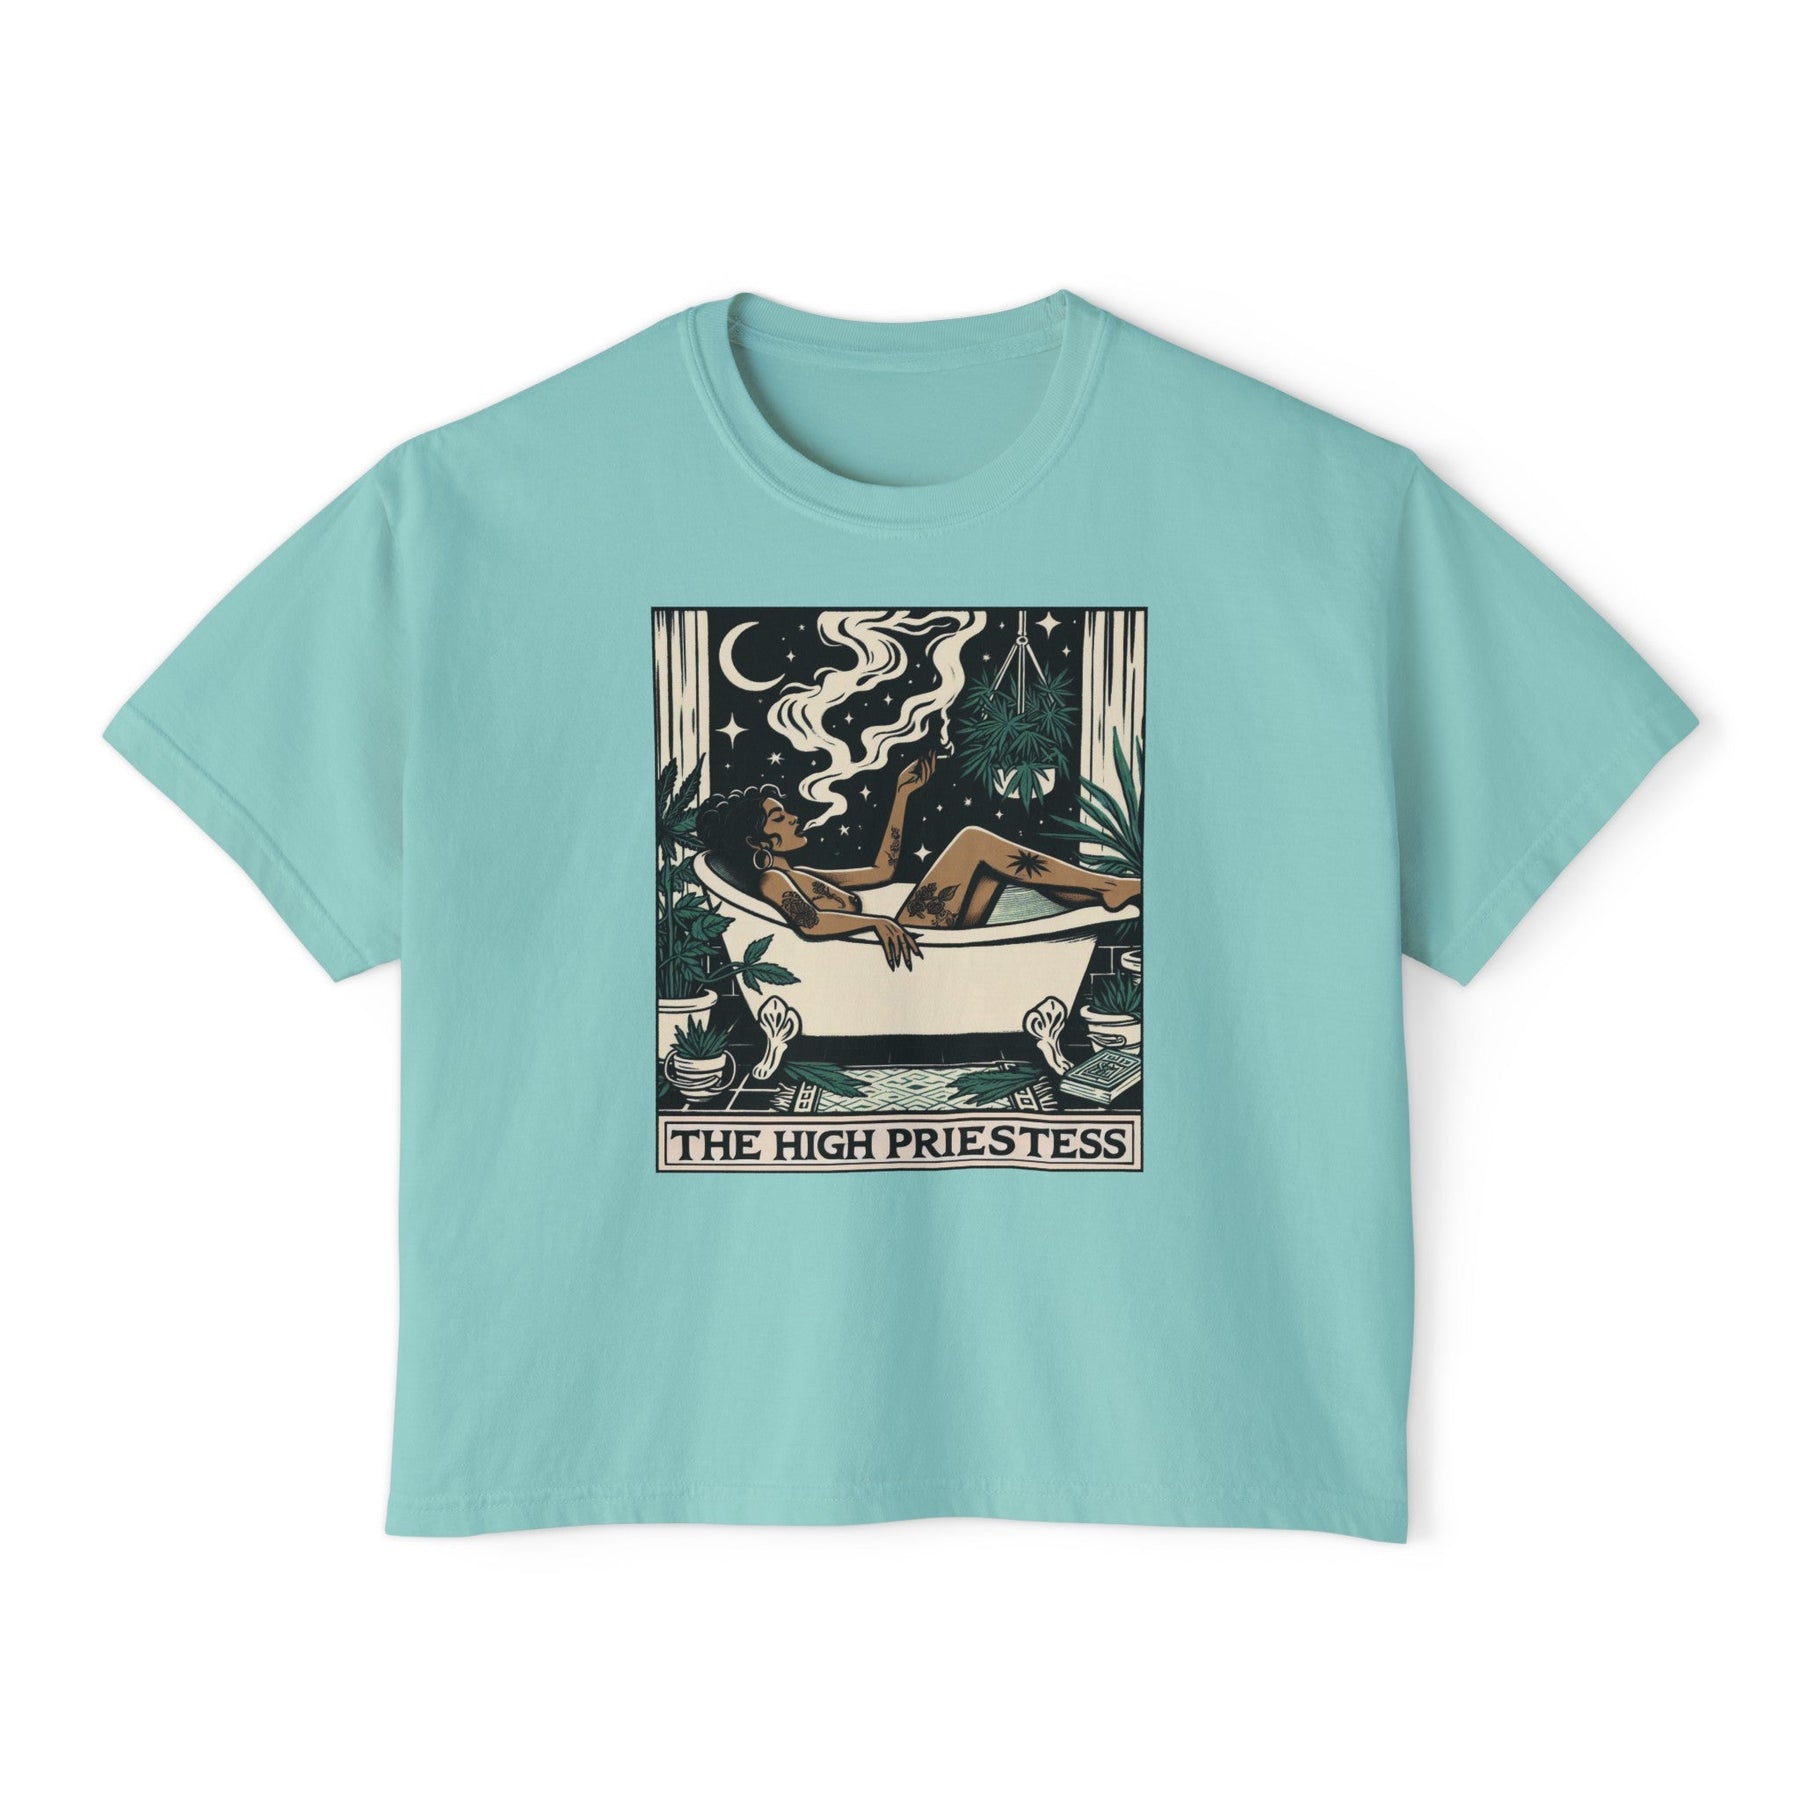 The High Priestess Goddess Women's Crop Top Boxy Tee - Goth Cloth Co.T - Shirt29486781211487732109